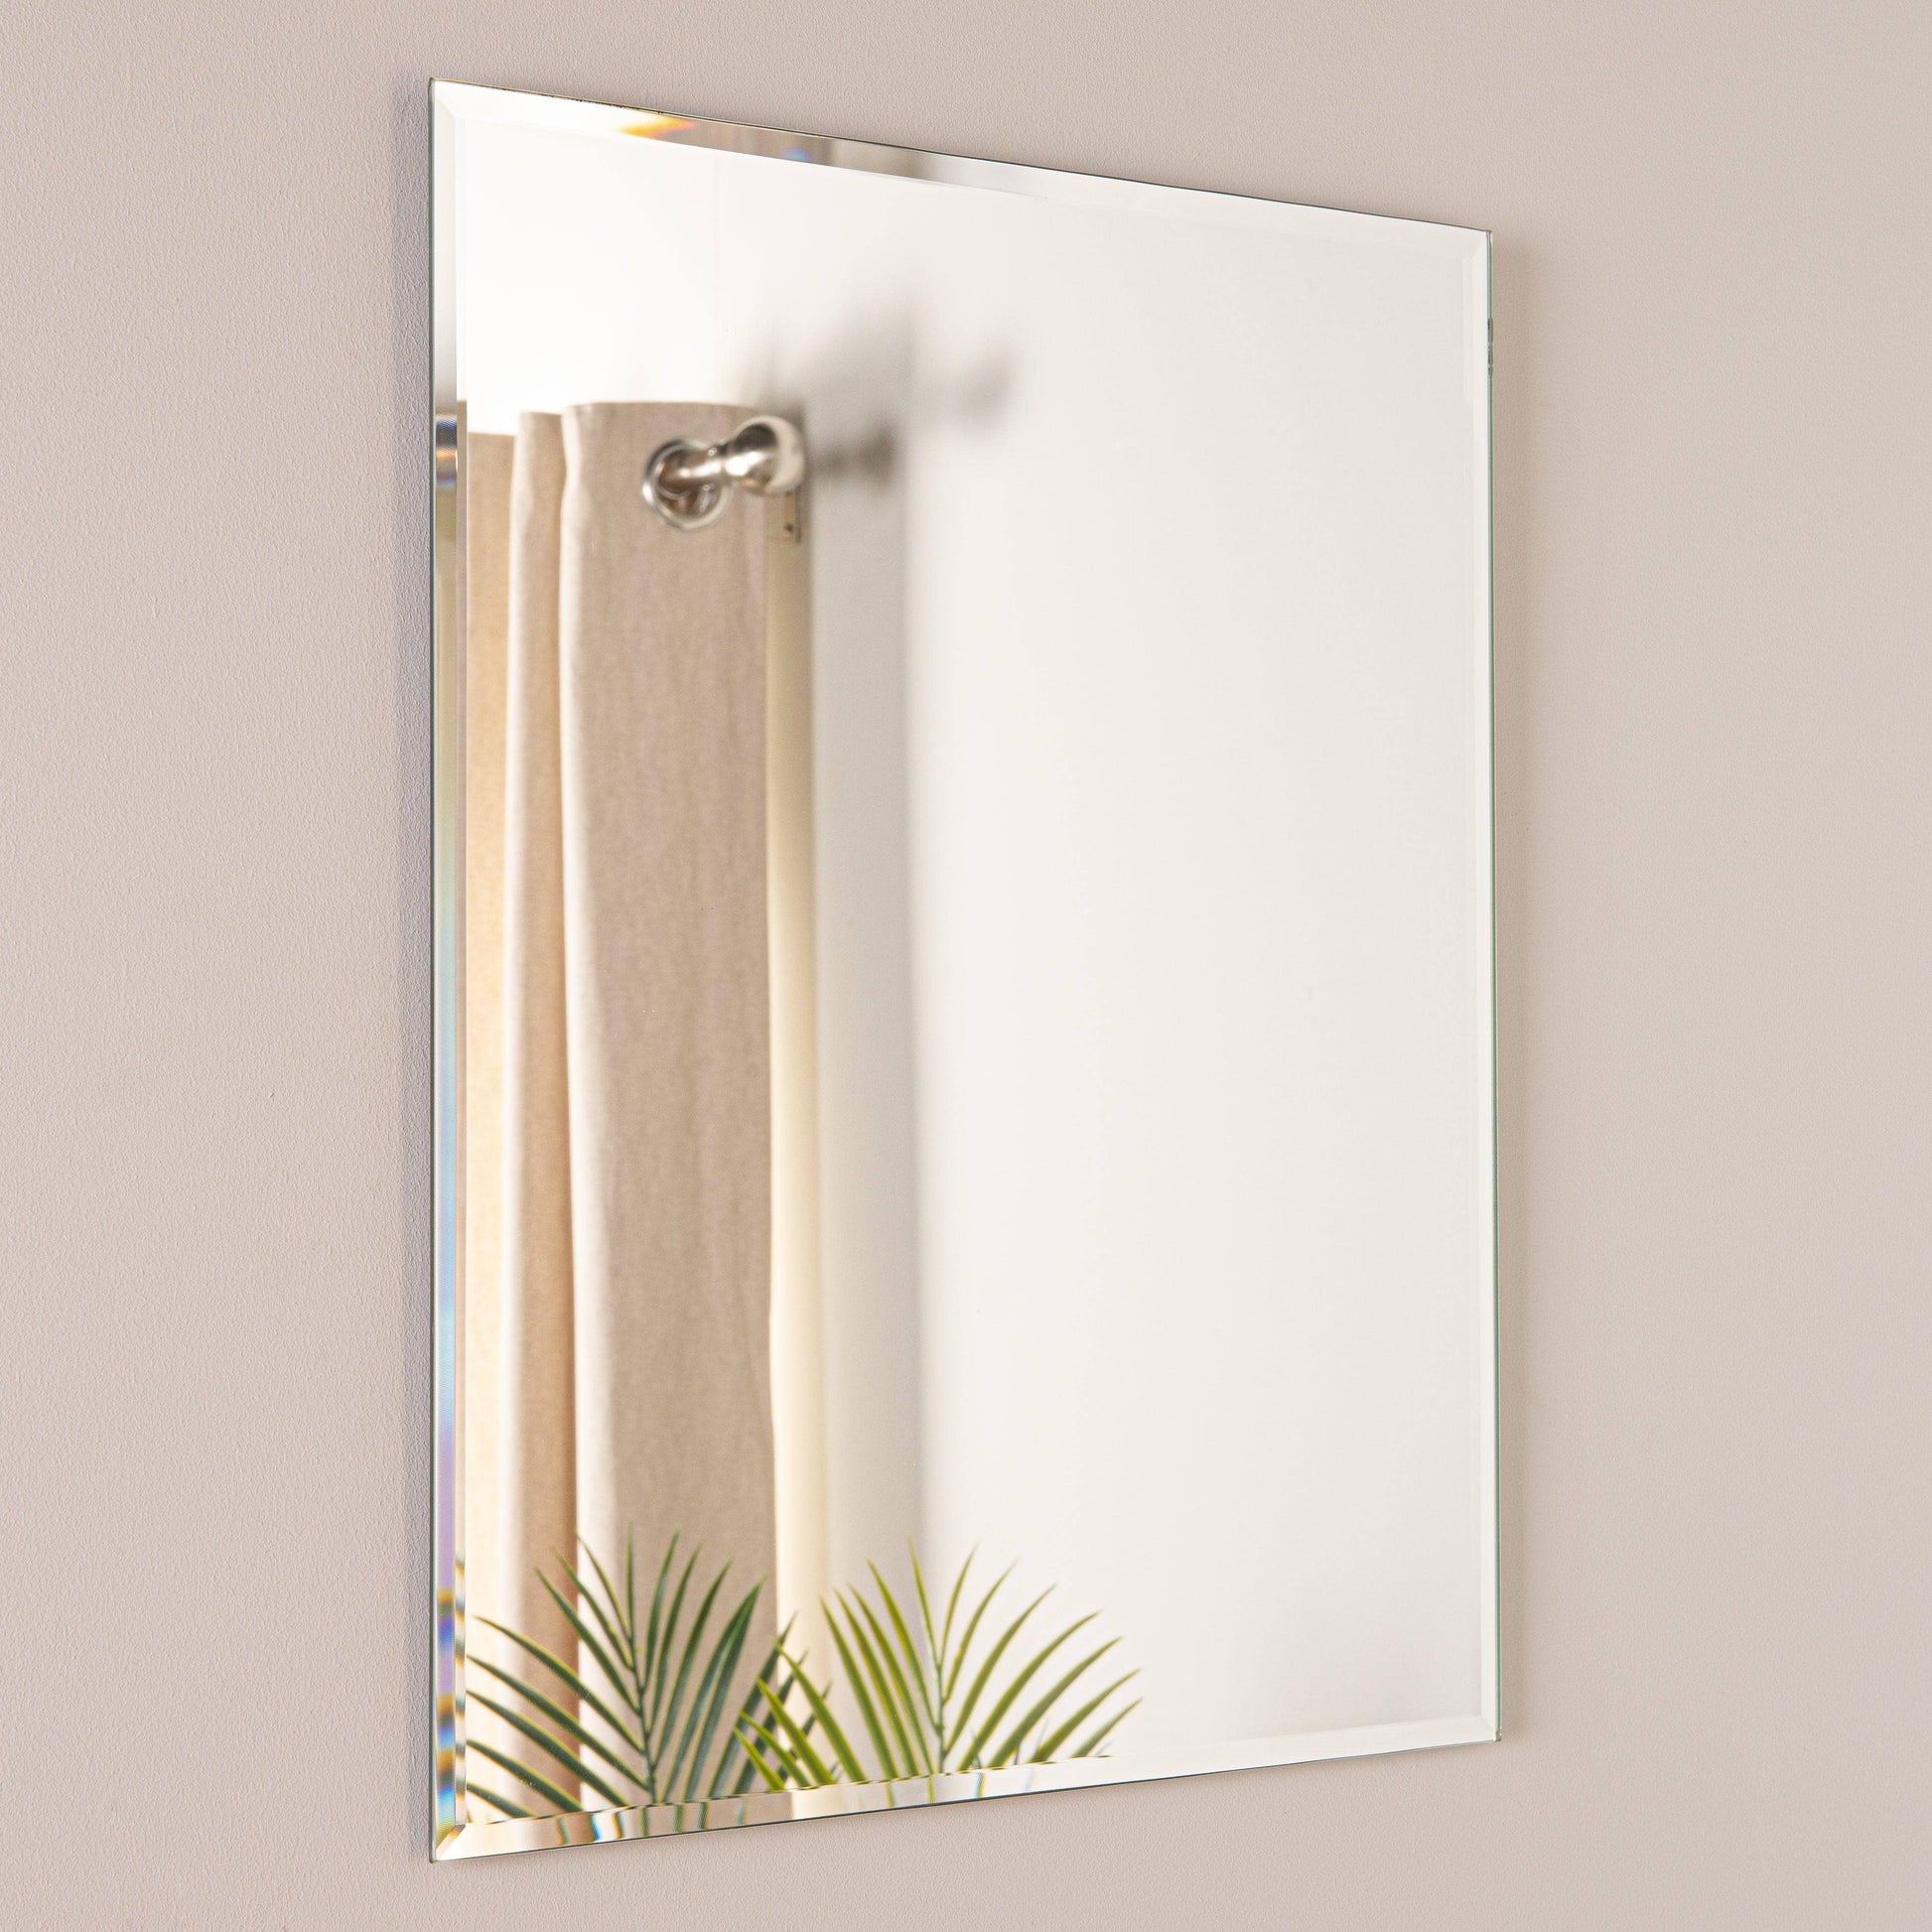 Mirrors  -  Euro Mirror Rectangle Bevelled - 50 x 40cm  -  50155662